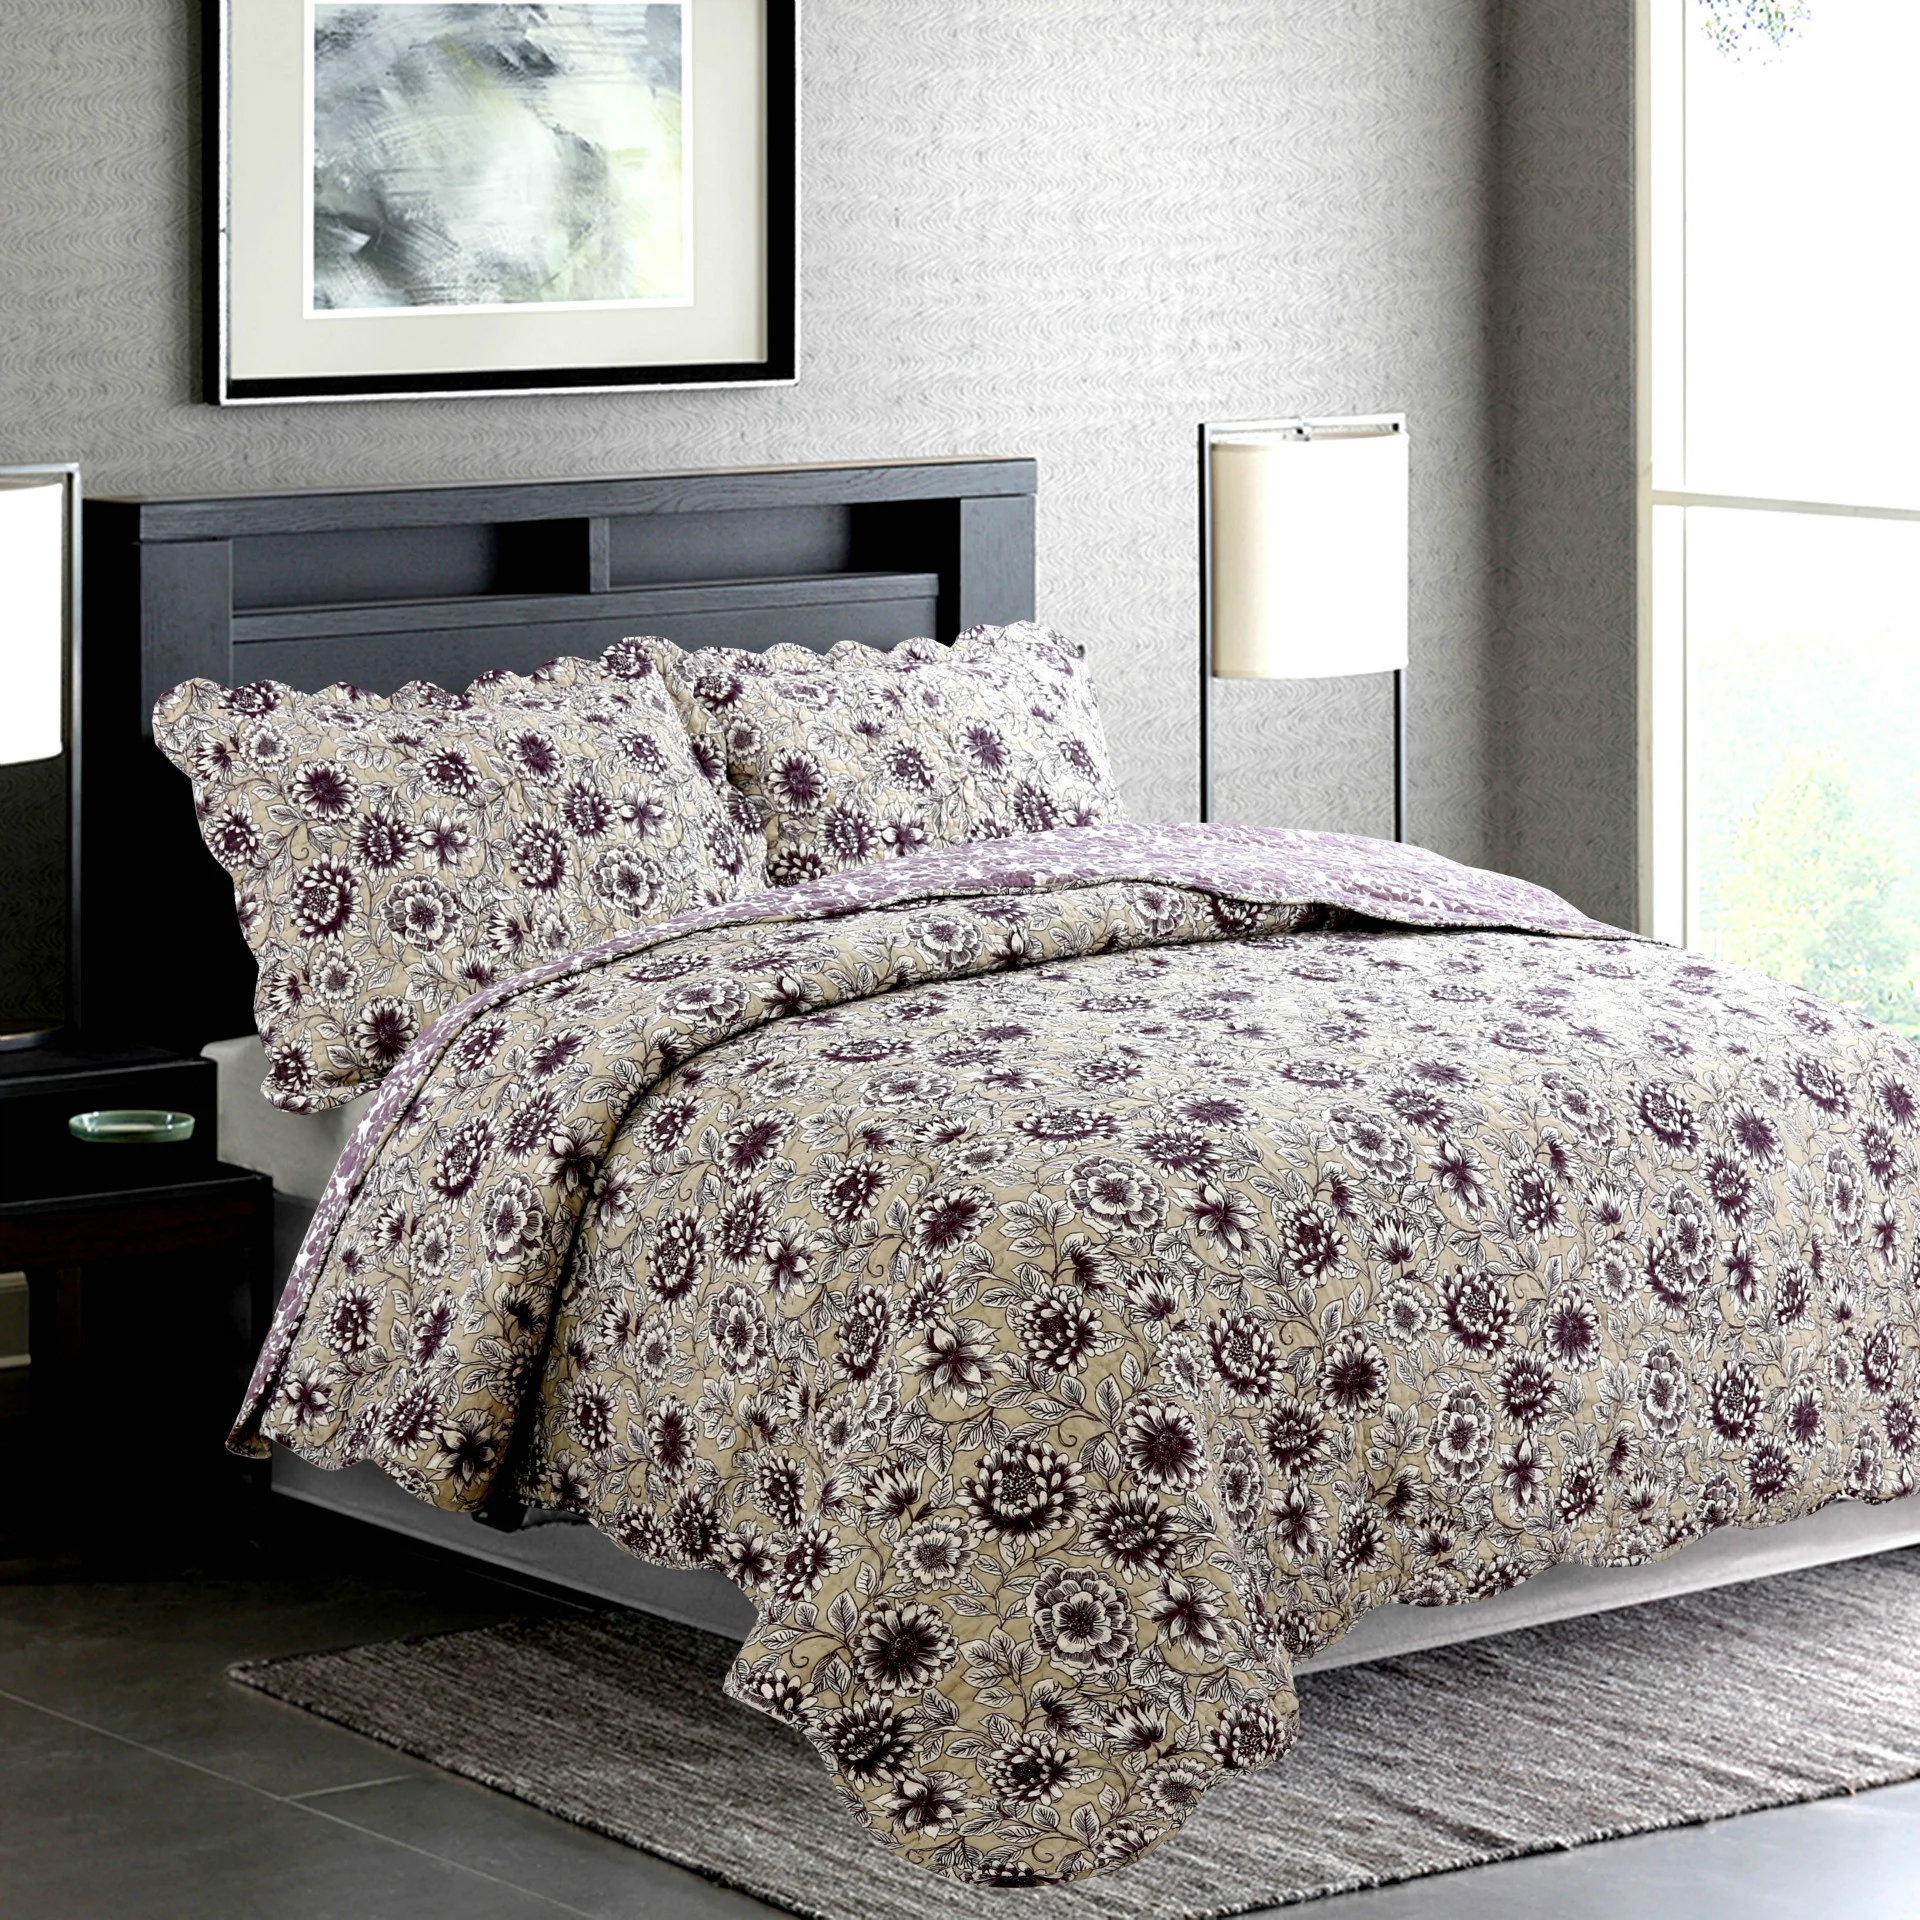 

Vibrant Blossom Floral printed 100% Cotton Reversible set, 3Pieces Queen size Bedspread Coverlet Pillow shams